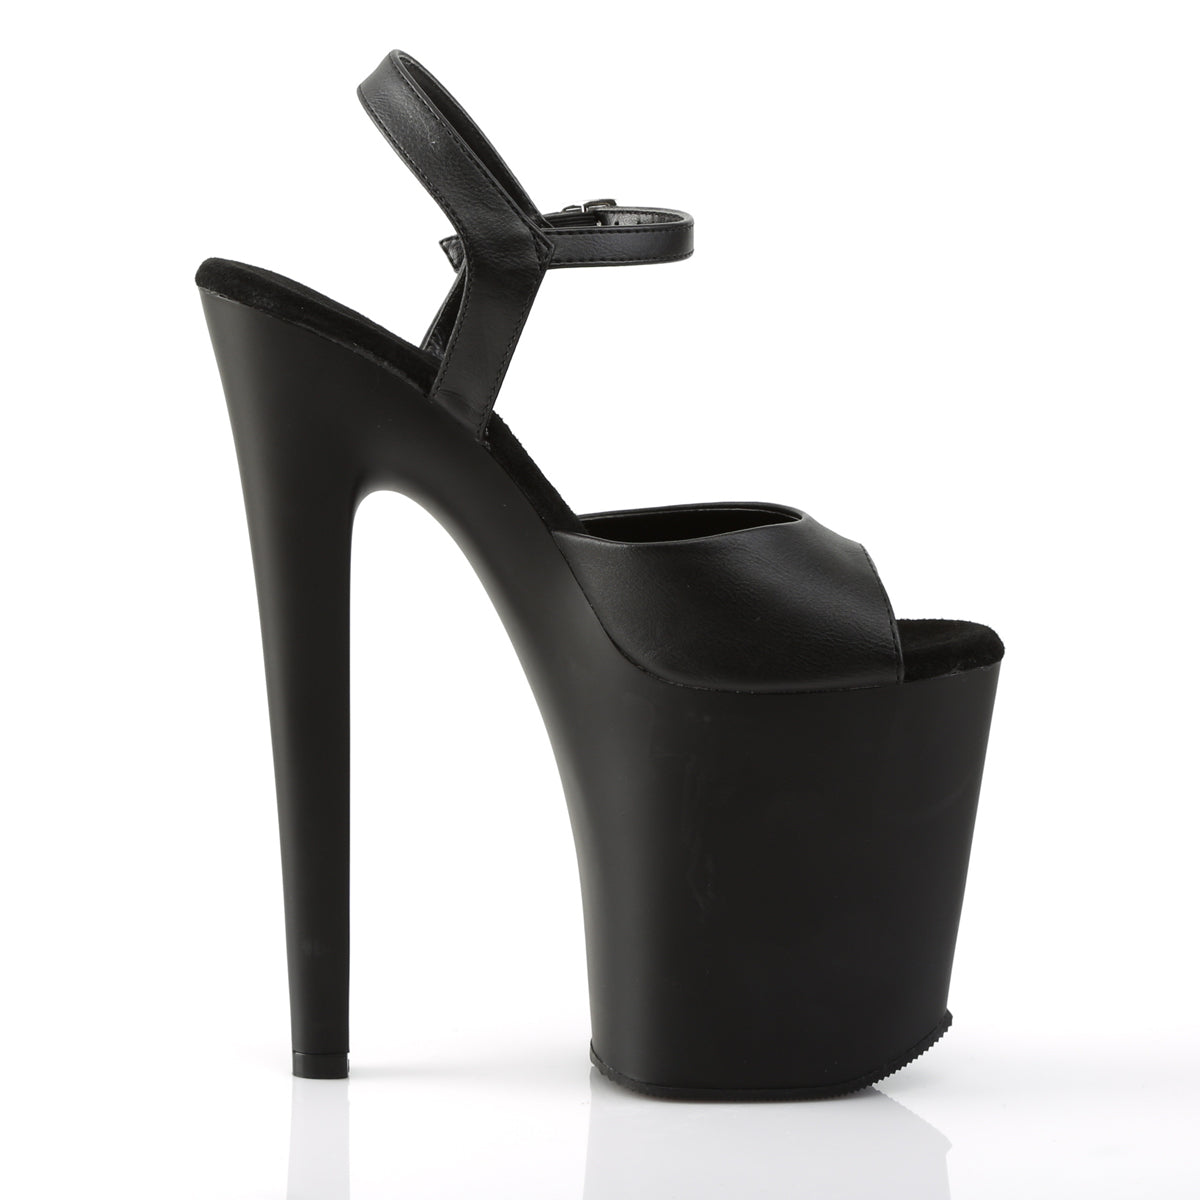 XTREME-809 Pleaser 8" Heel Black Pole Dancing Platform Shoes-Pleaser- Sexy Shoes Fetish Heels